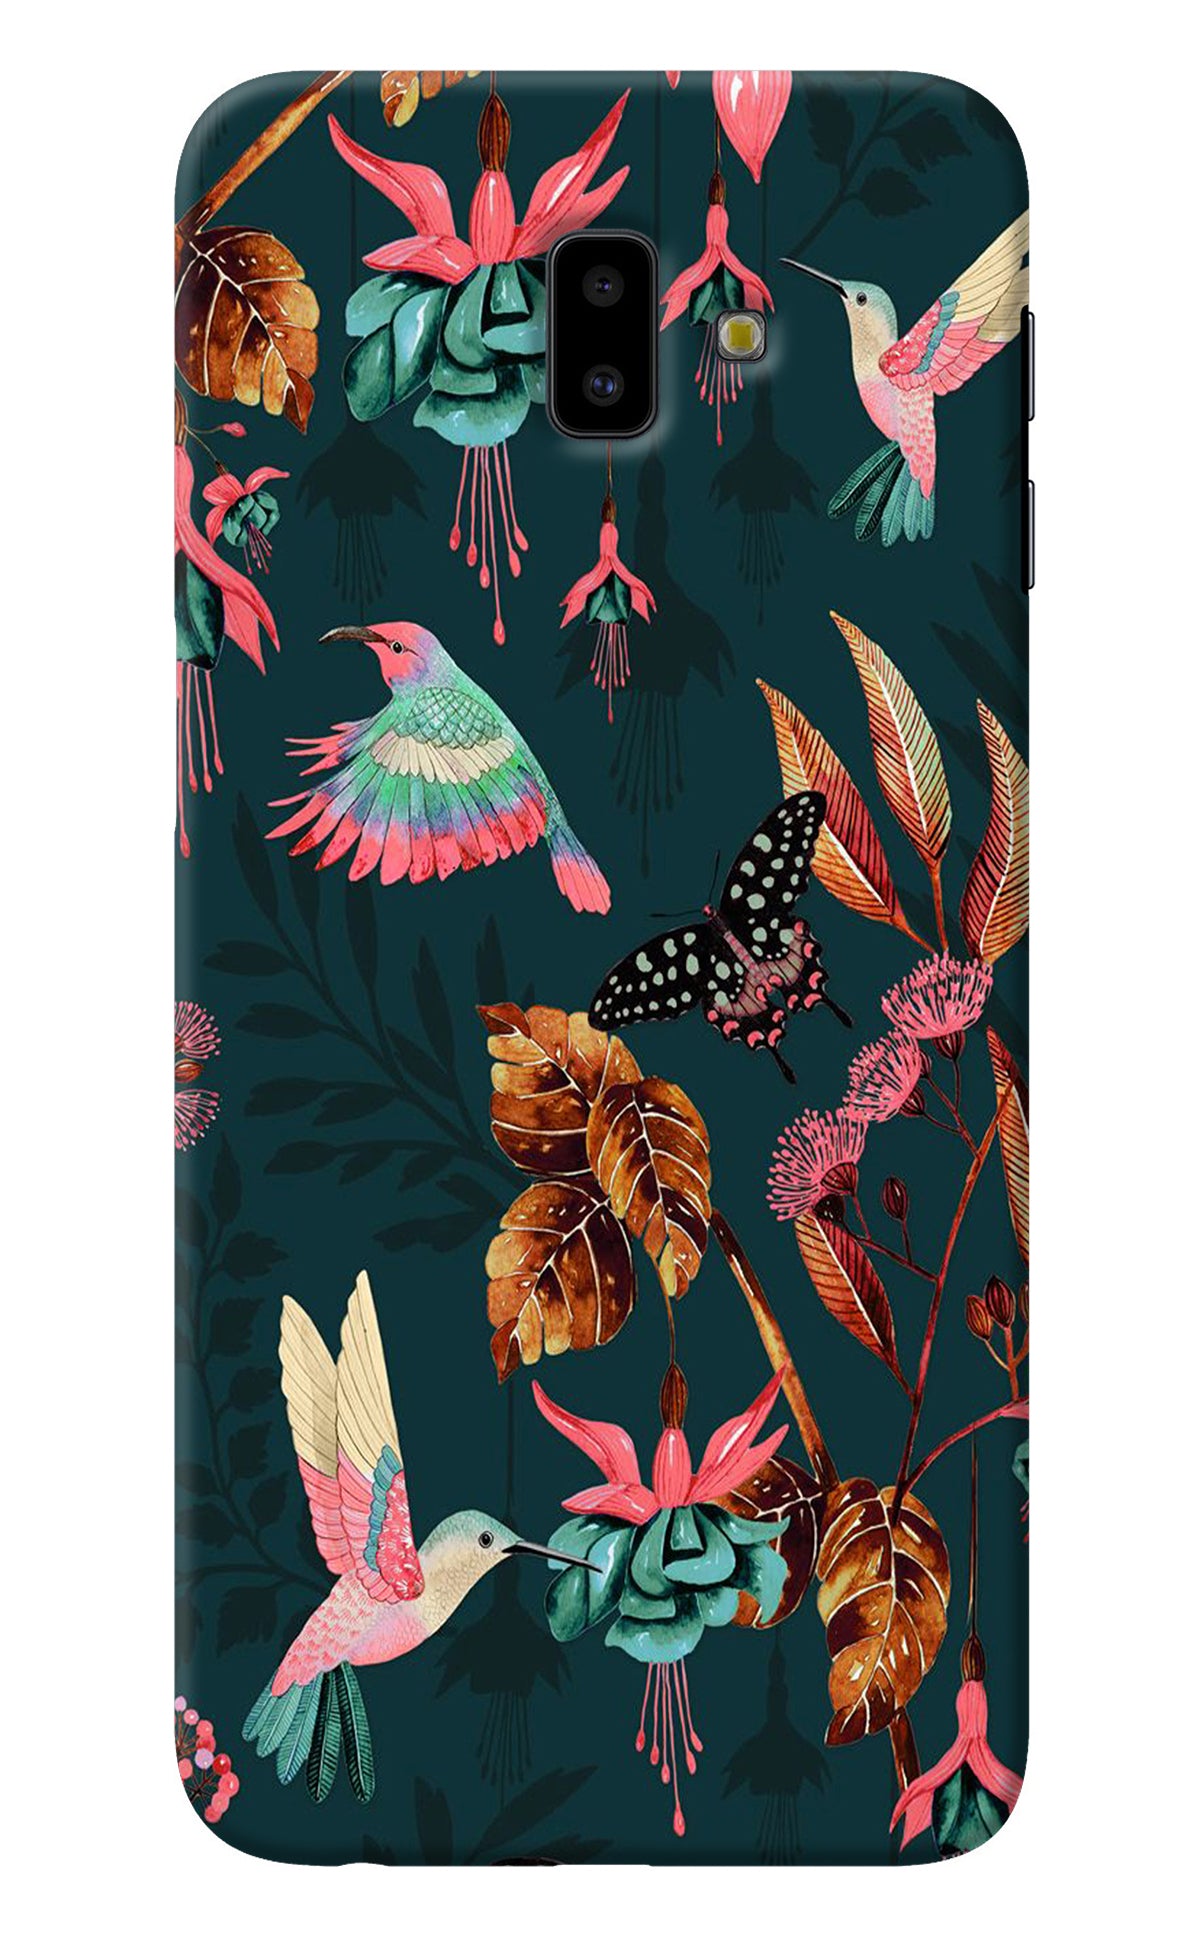 Birds Samsung J6 plus Back Cover